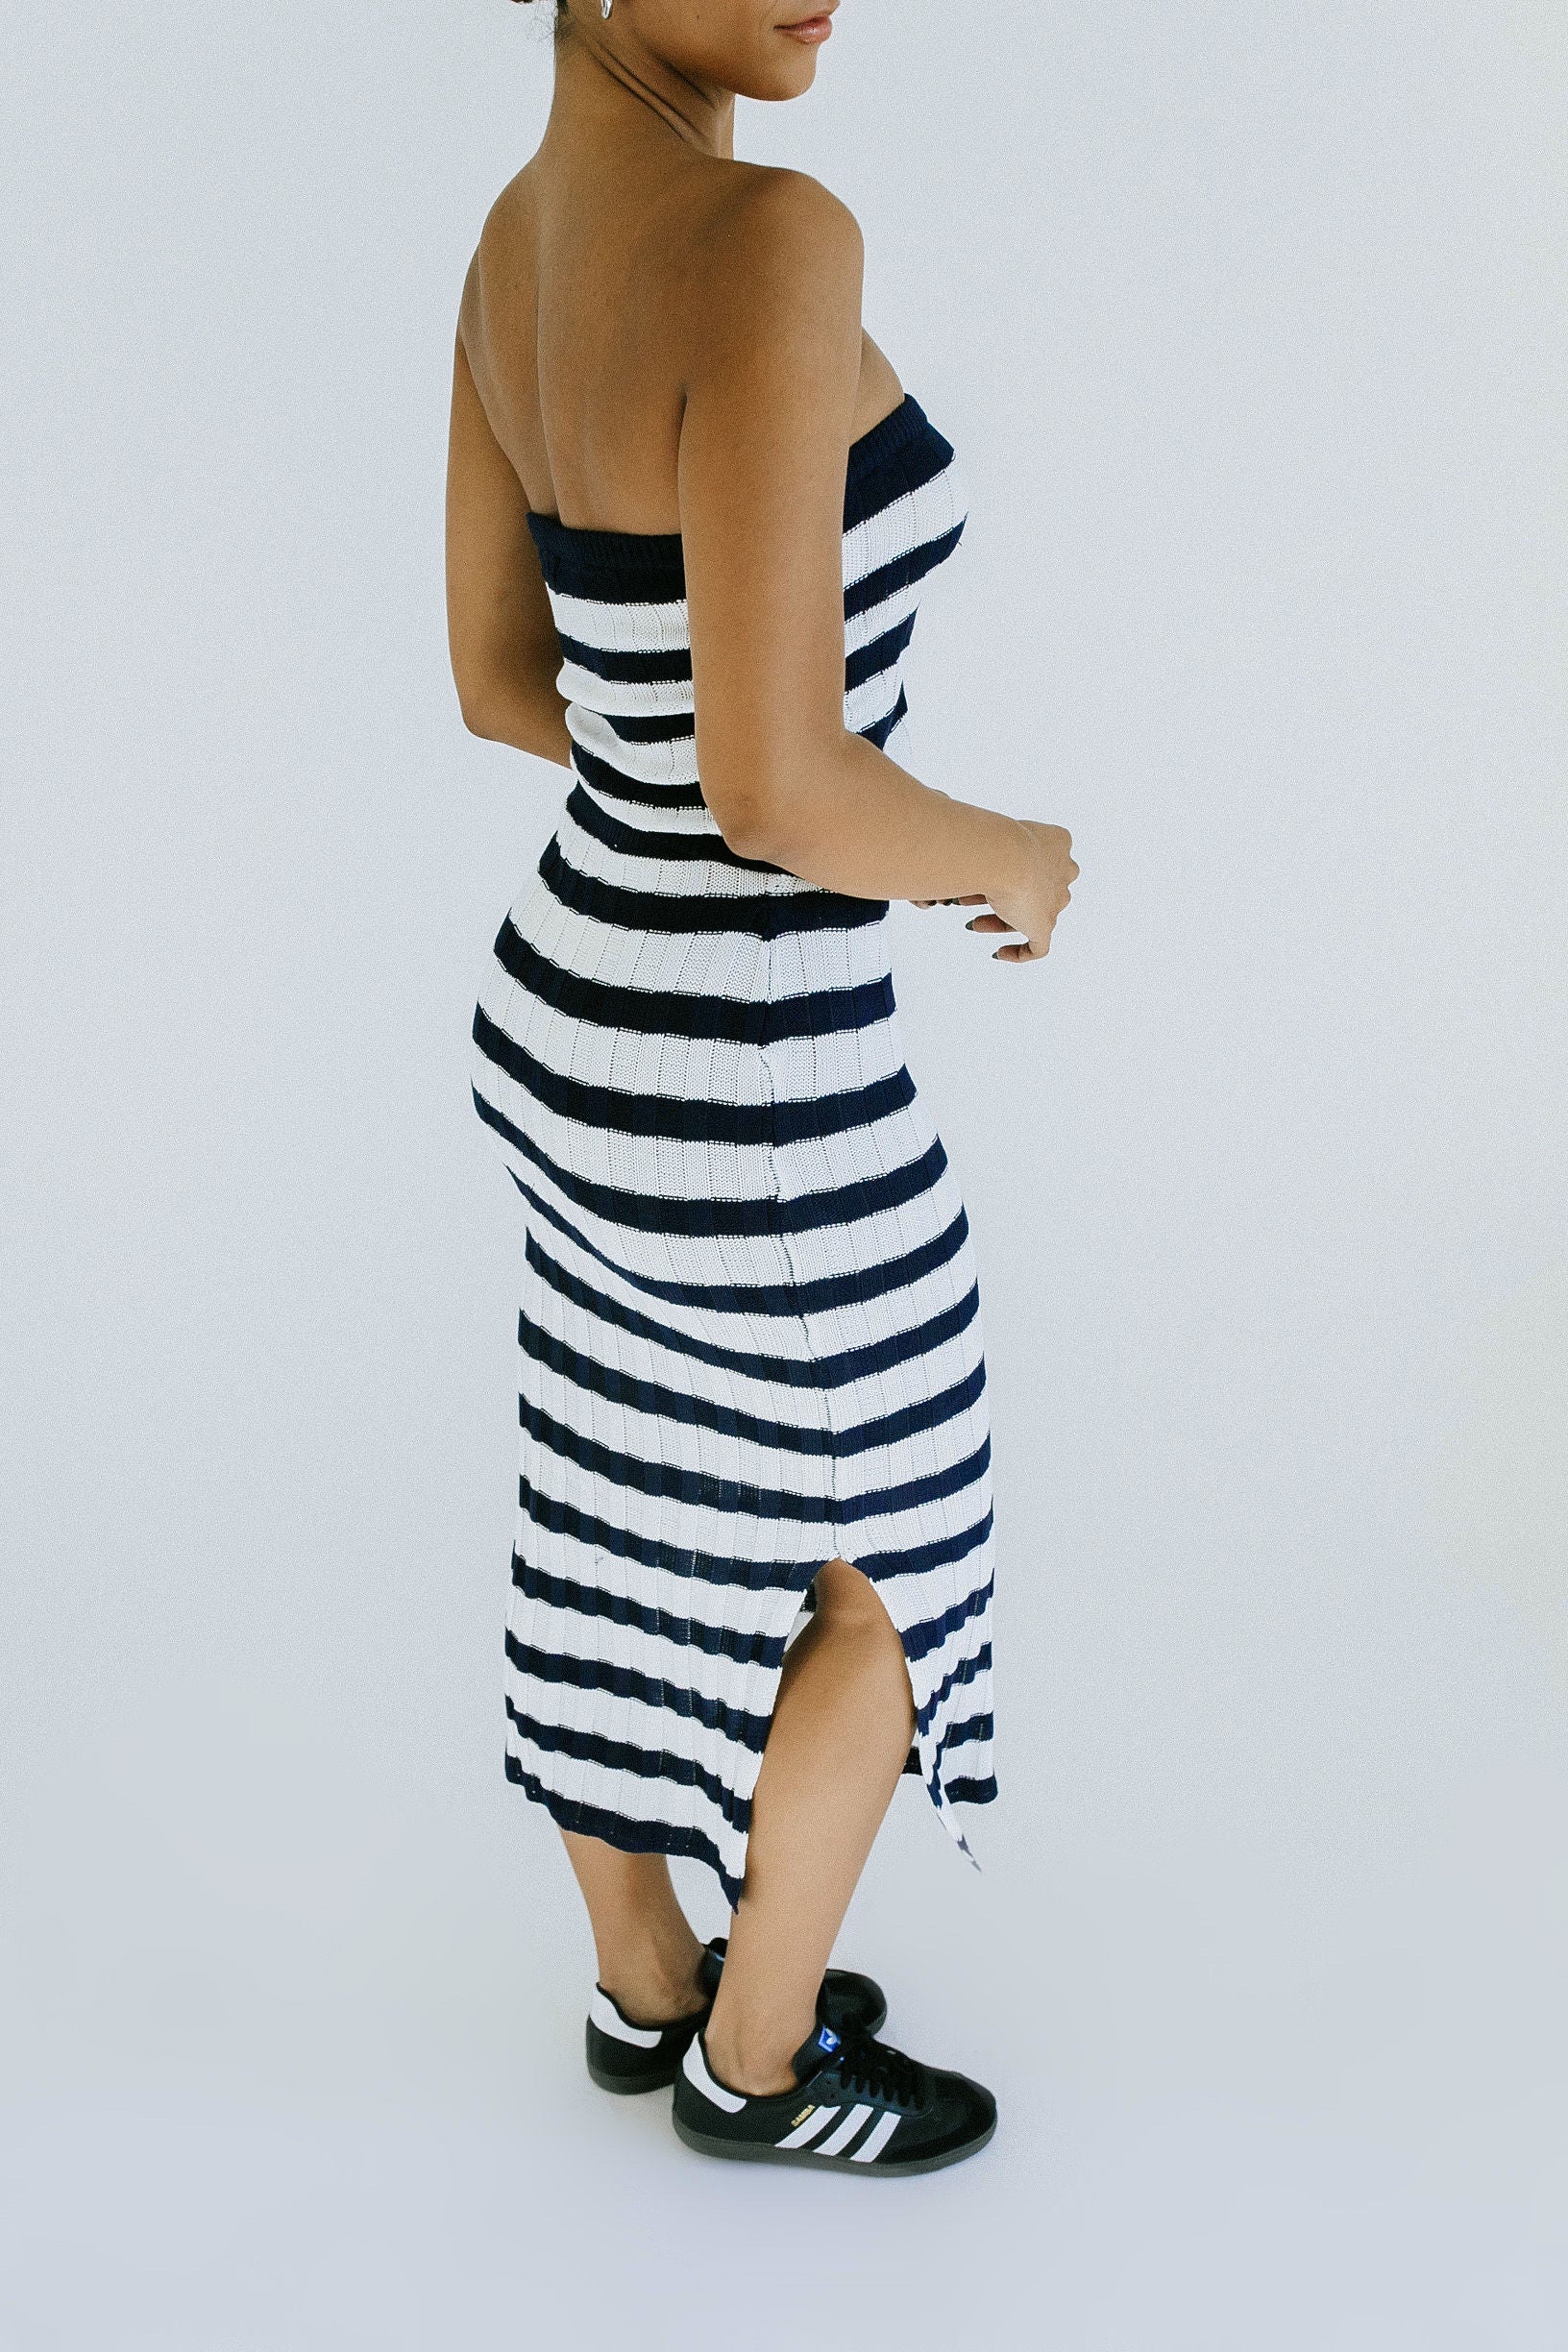 Chantelle Striped Top + Skirt Set - Navy + White